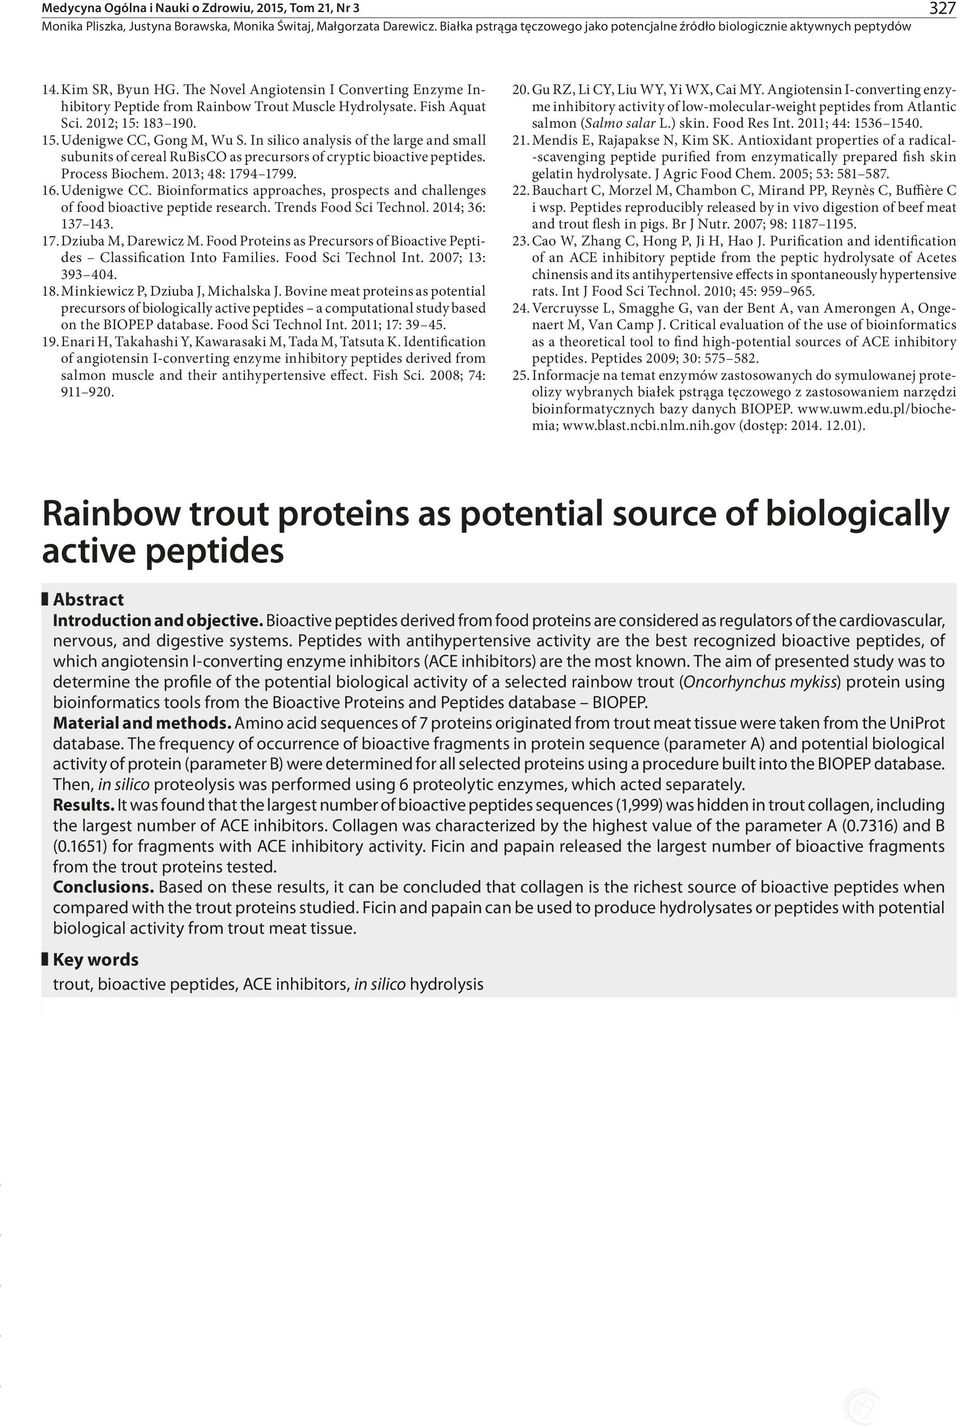 2013; 48: 1794 1799. 16. Udenigwe CC. Bioinformatics approaches, prospects and challenges of food bioactive peptide research. Trends Food Sci Technol. 2014; 36: 137 143. 17. Dziuba M, Darewicz M.